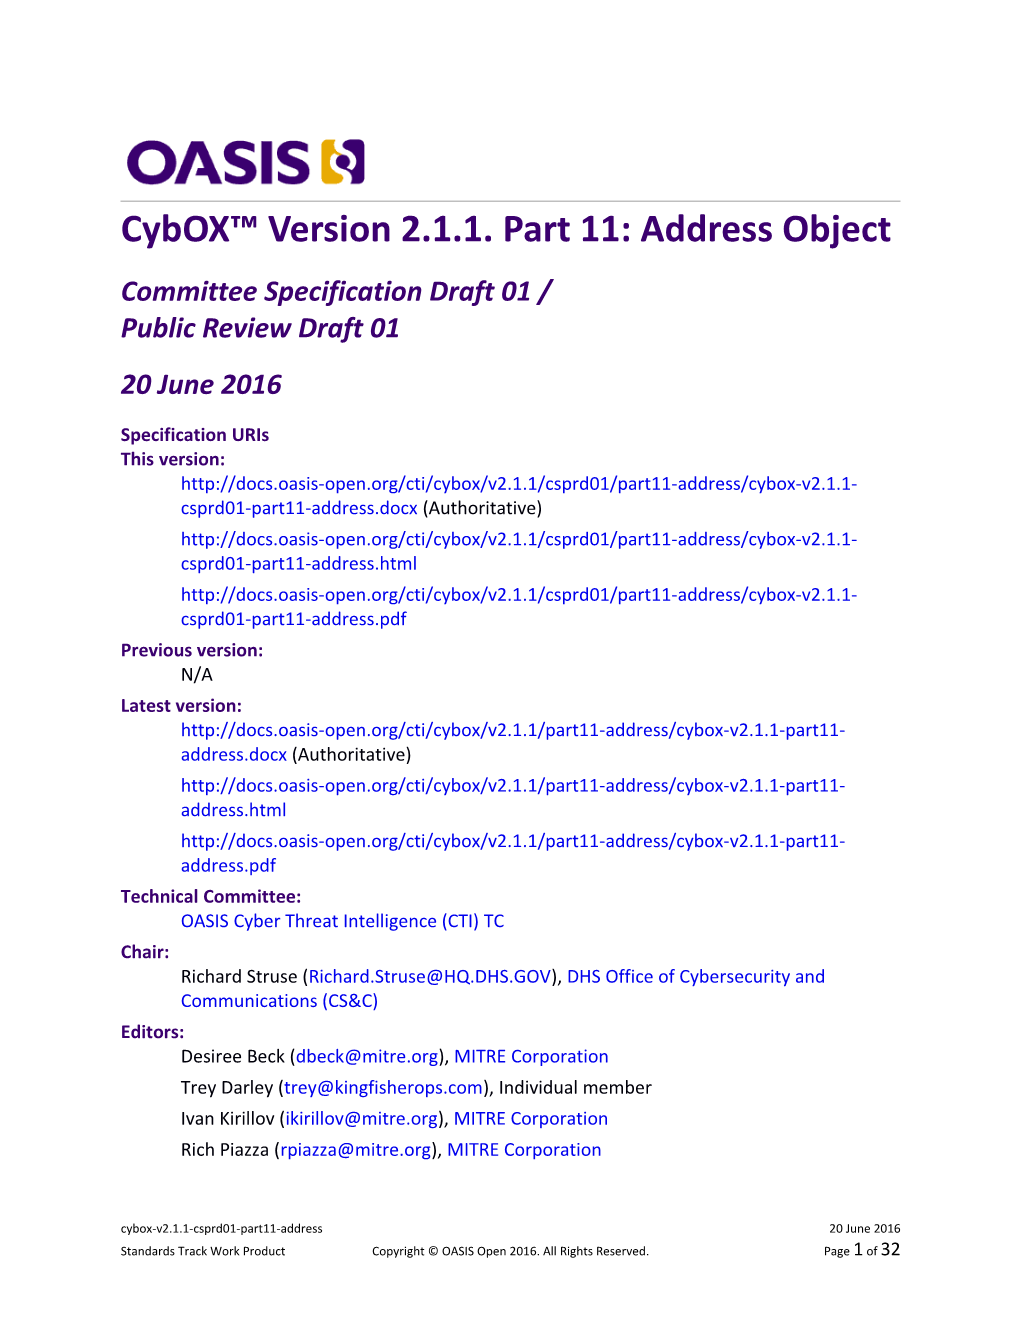 Cybox Version 2.1.1 Part 11: Address Object